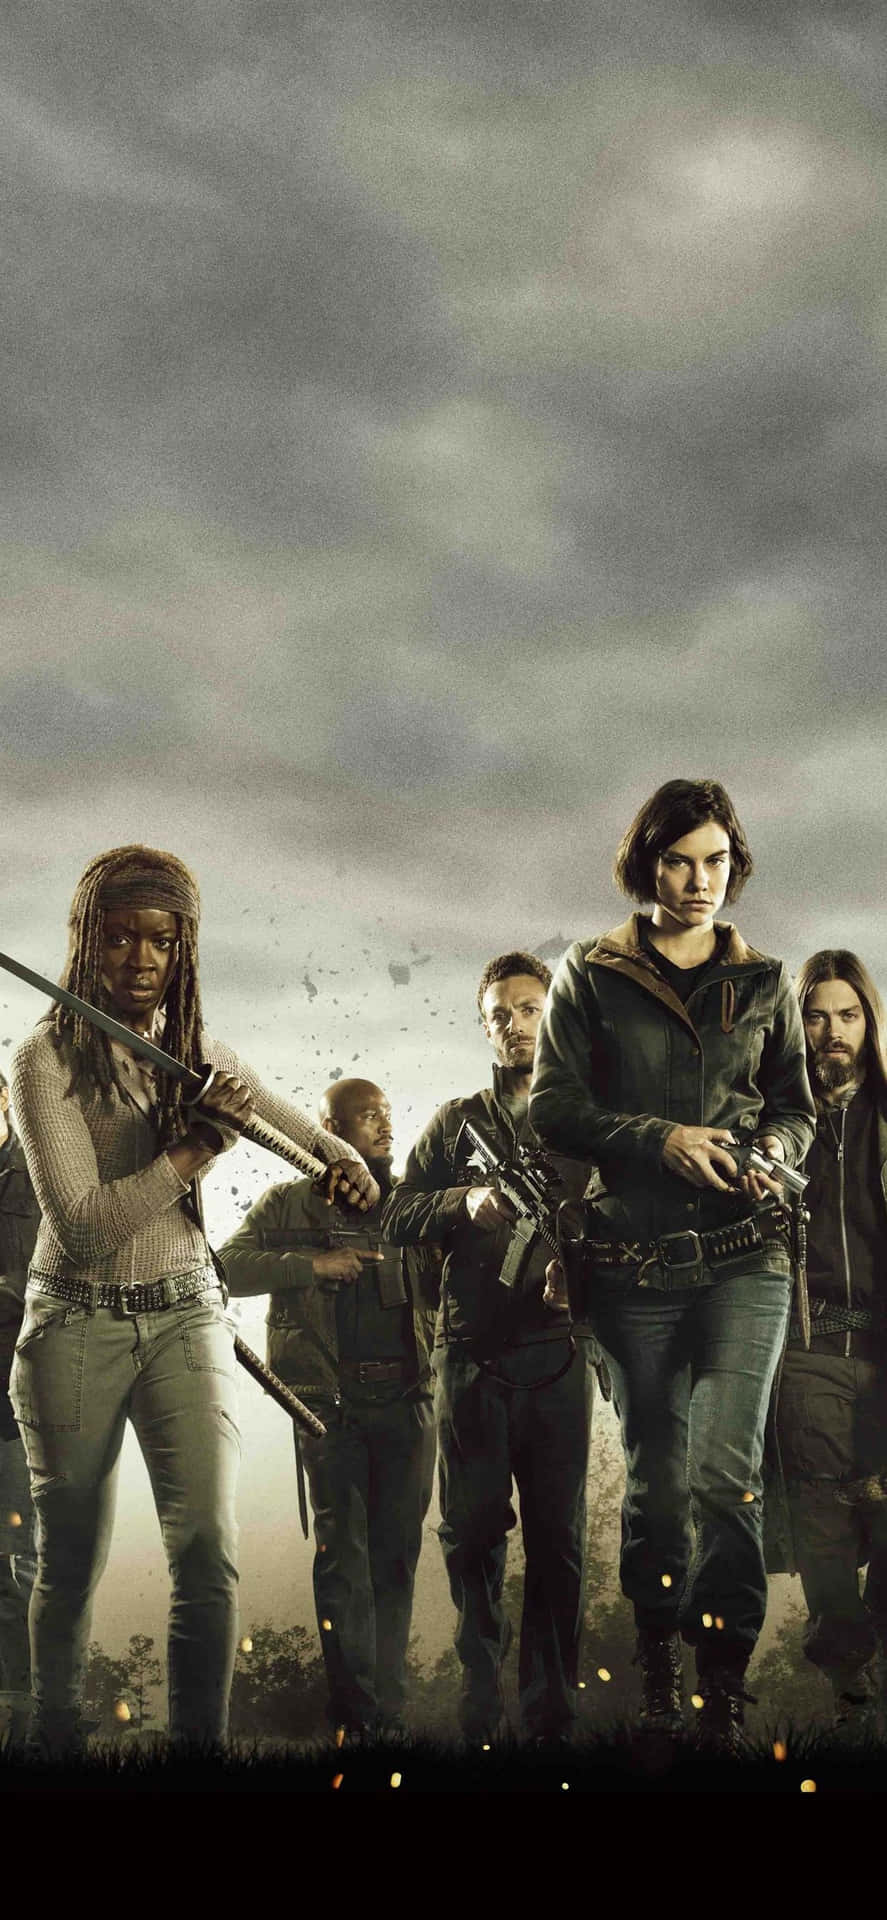 Plakat fra Walking Dead sæson 5 Wallpaper